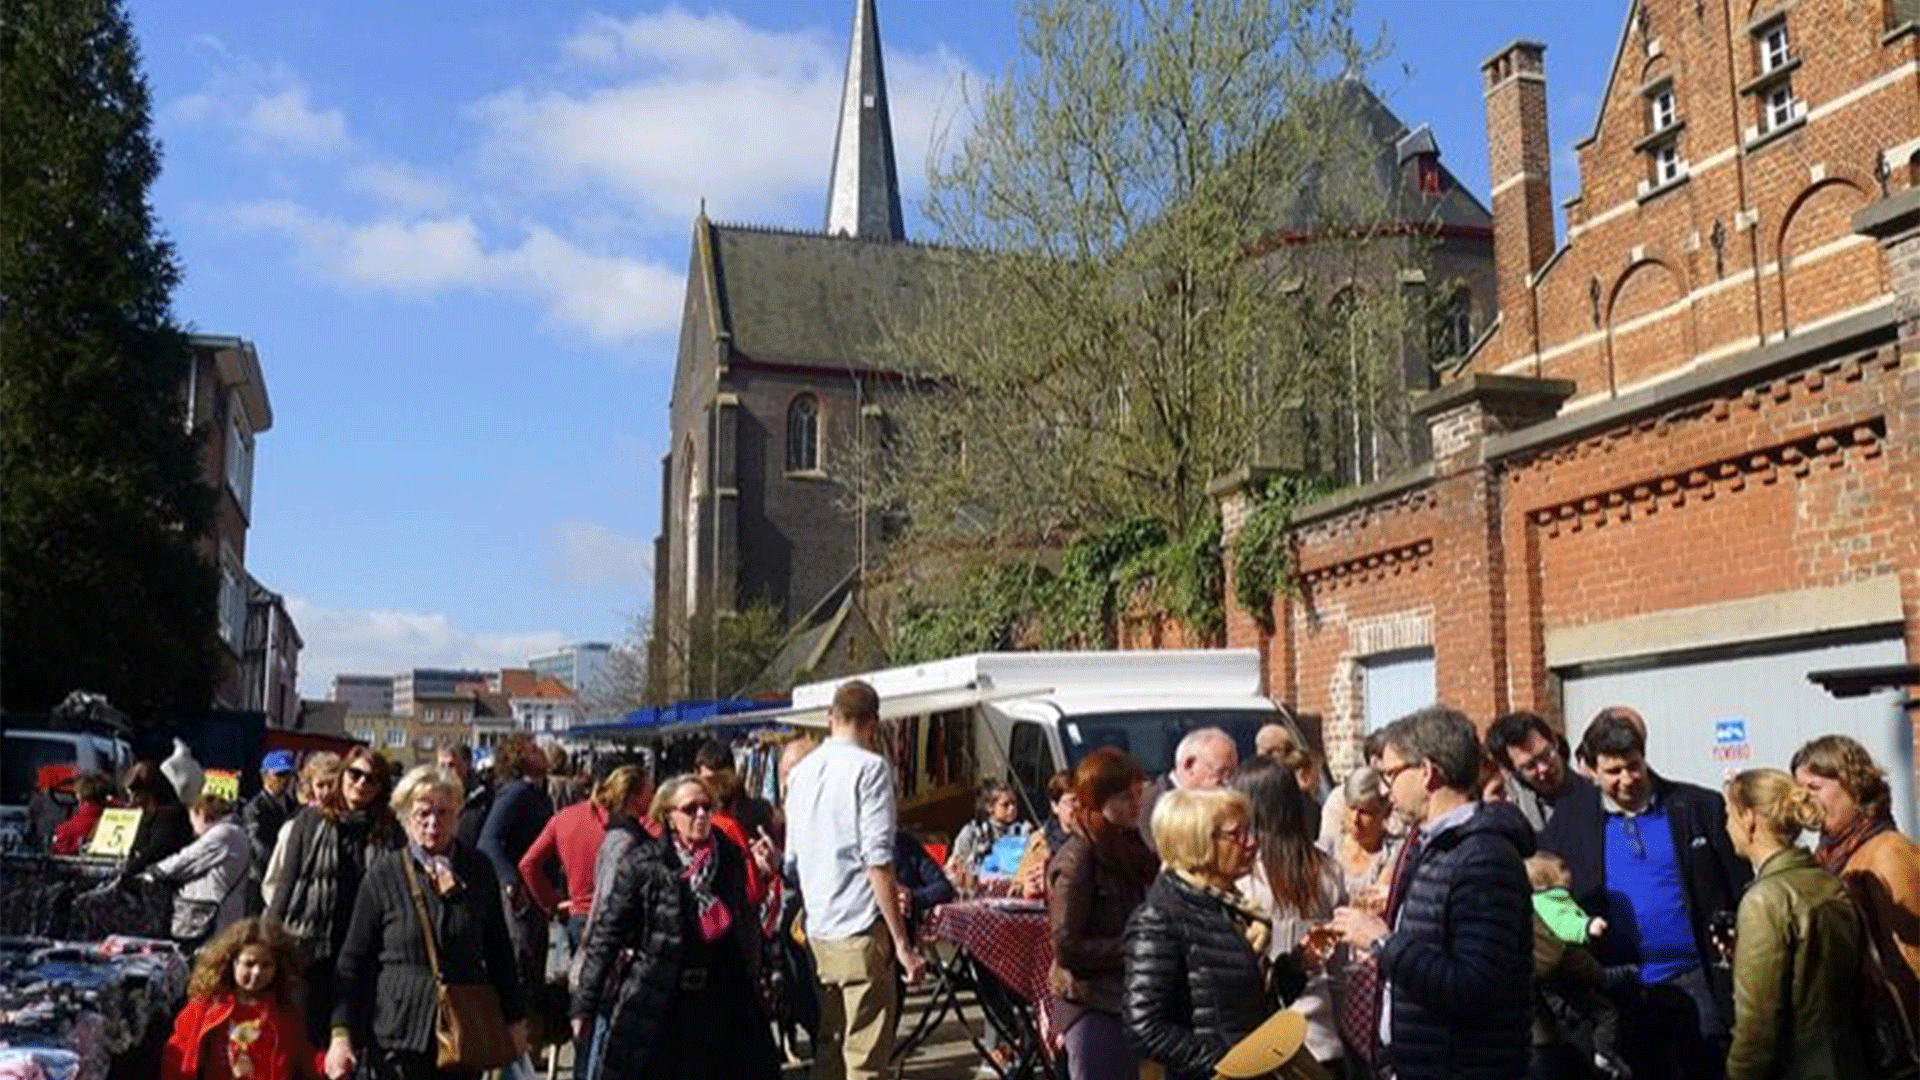 Sunday Market at Ledeberg by Bennie de Meulemeester 